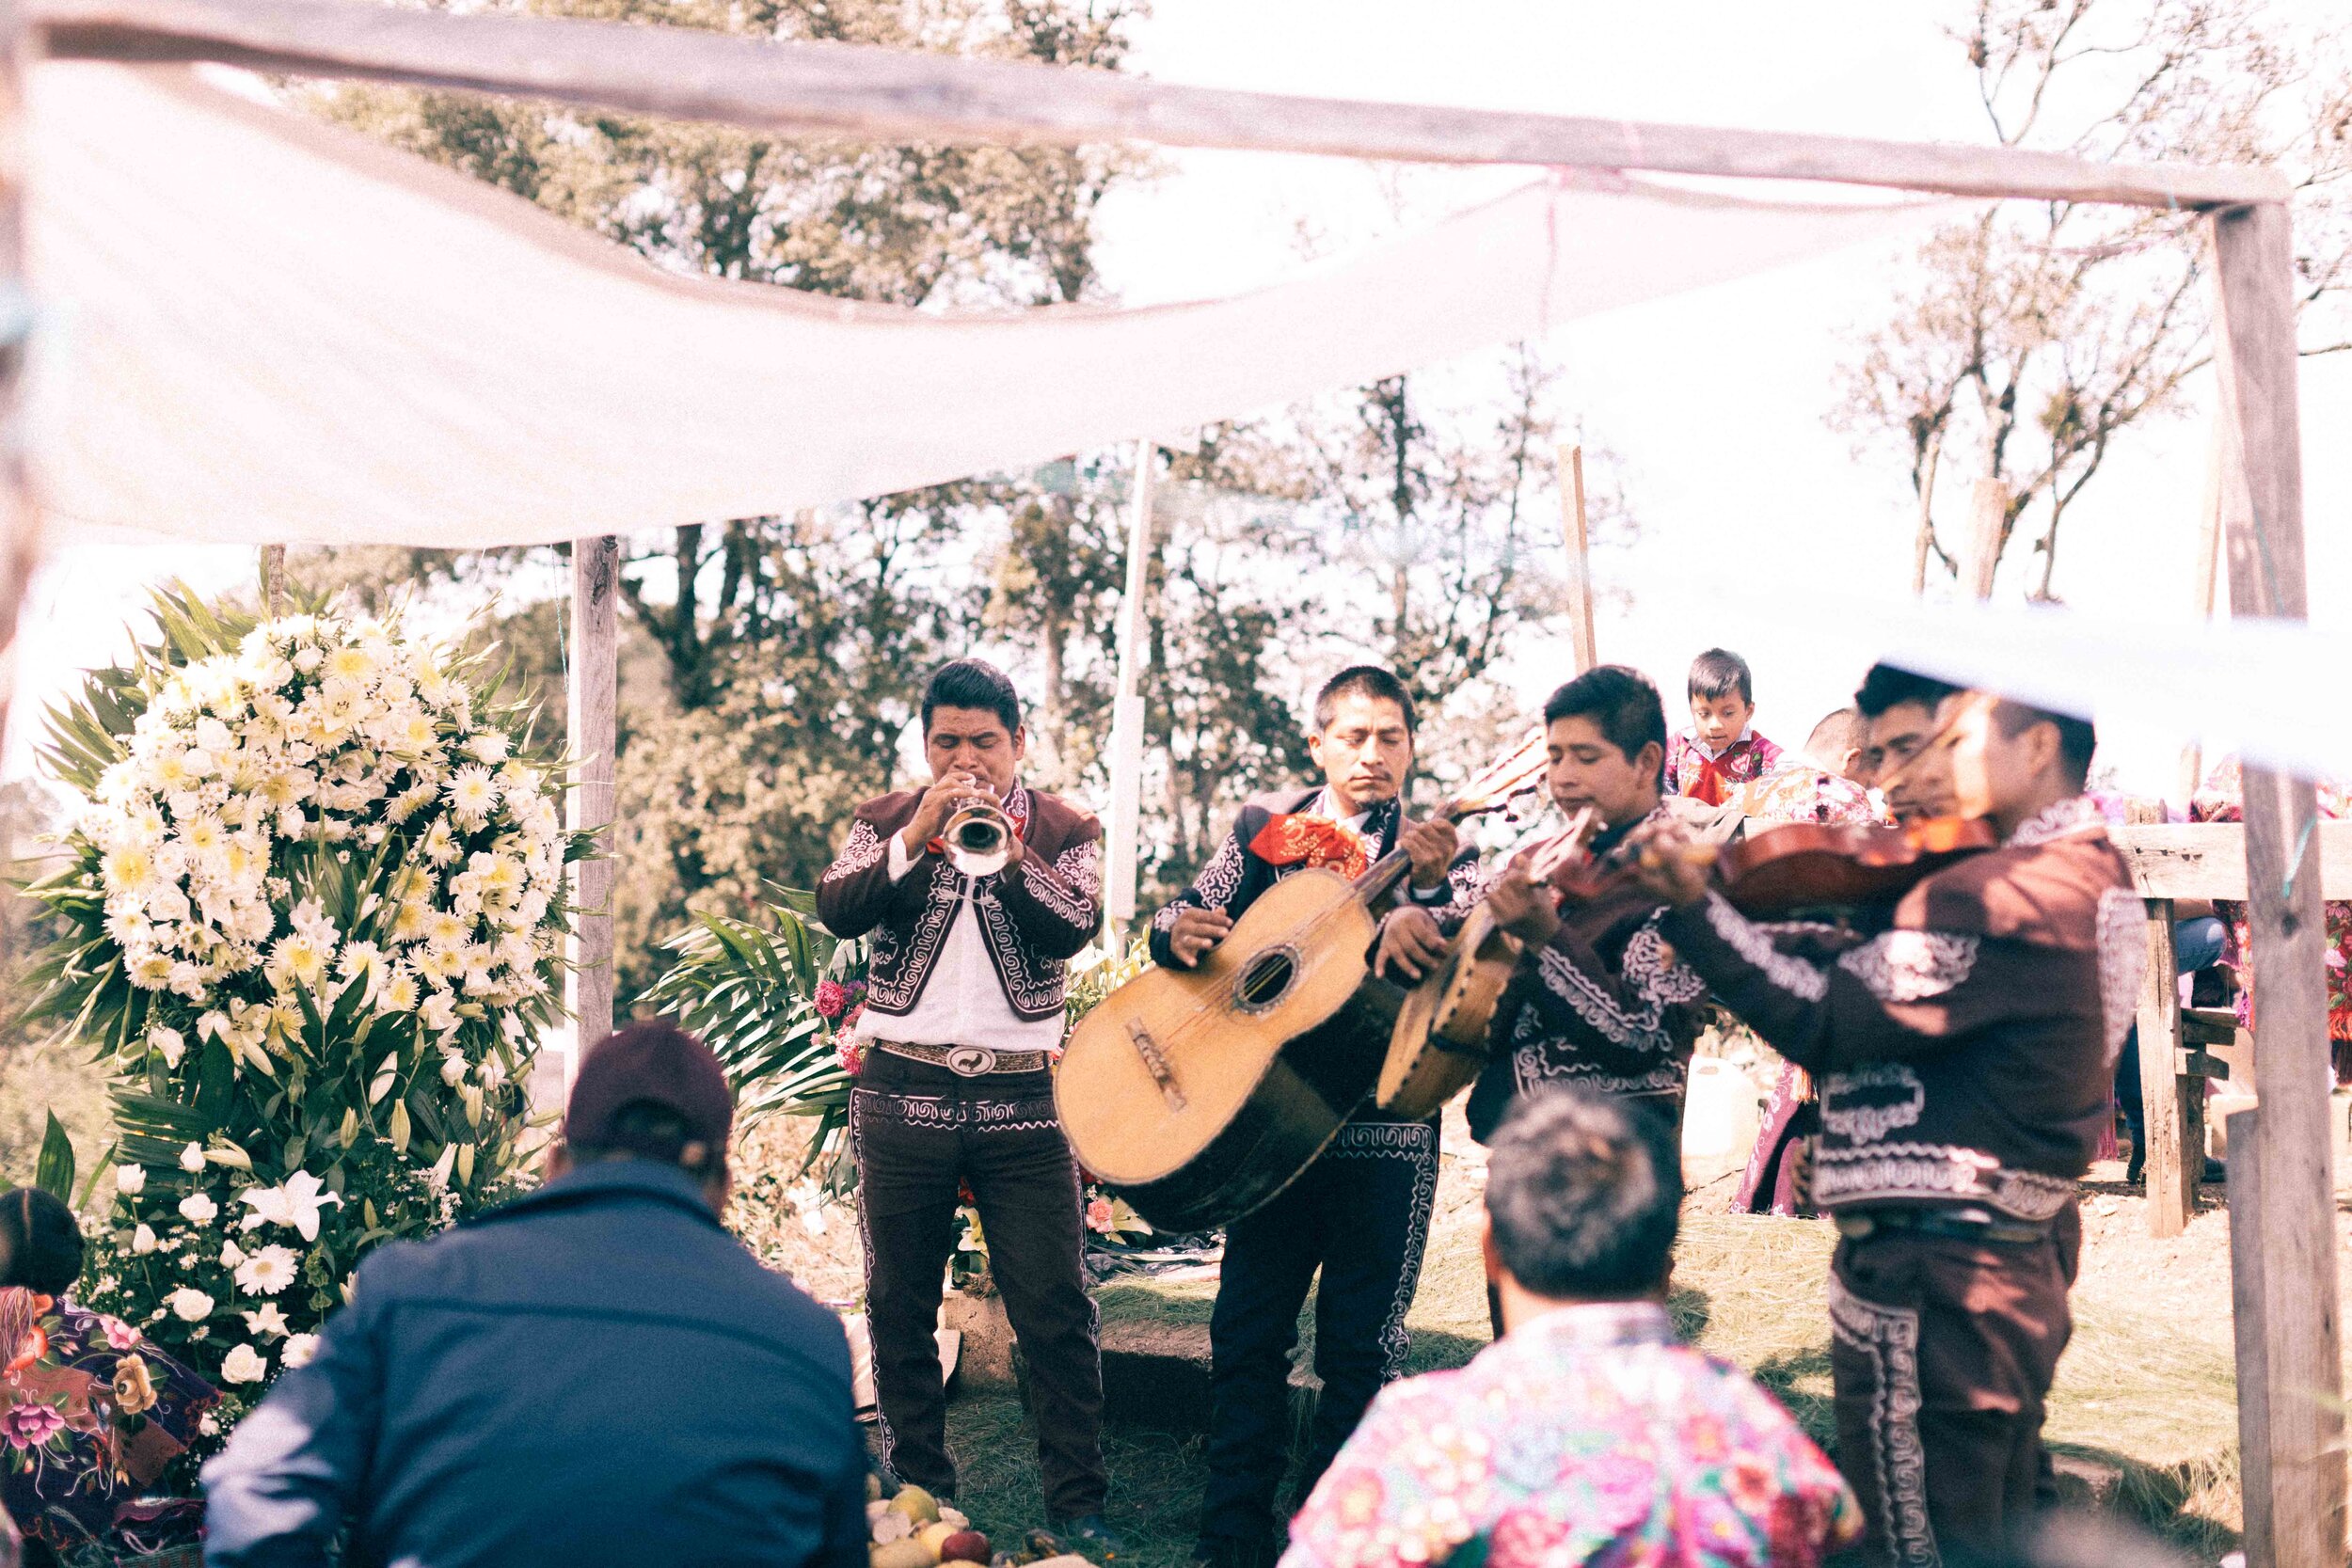 Jimena Peck Denver Editorial Documentary Photographer - Mexico Dia Muertos Band Playing